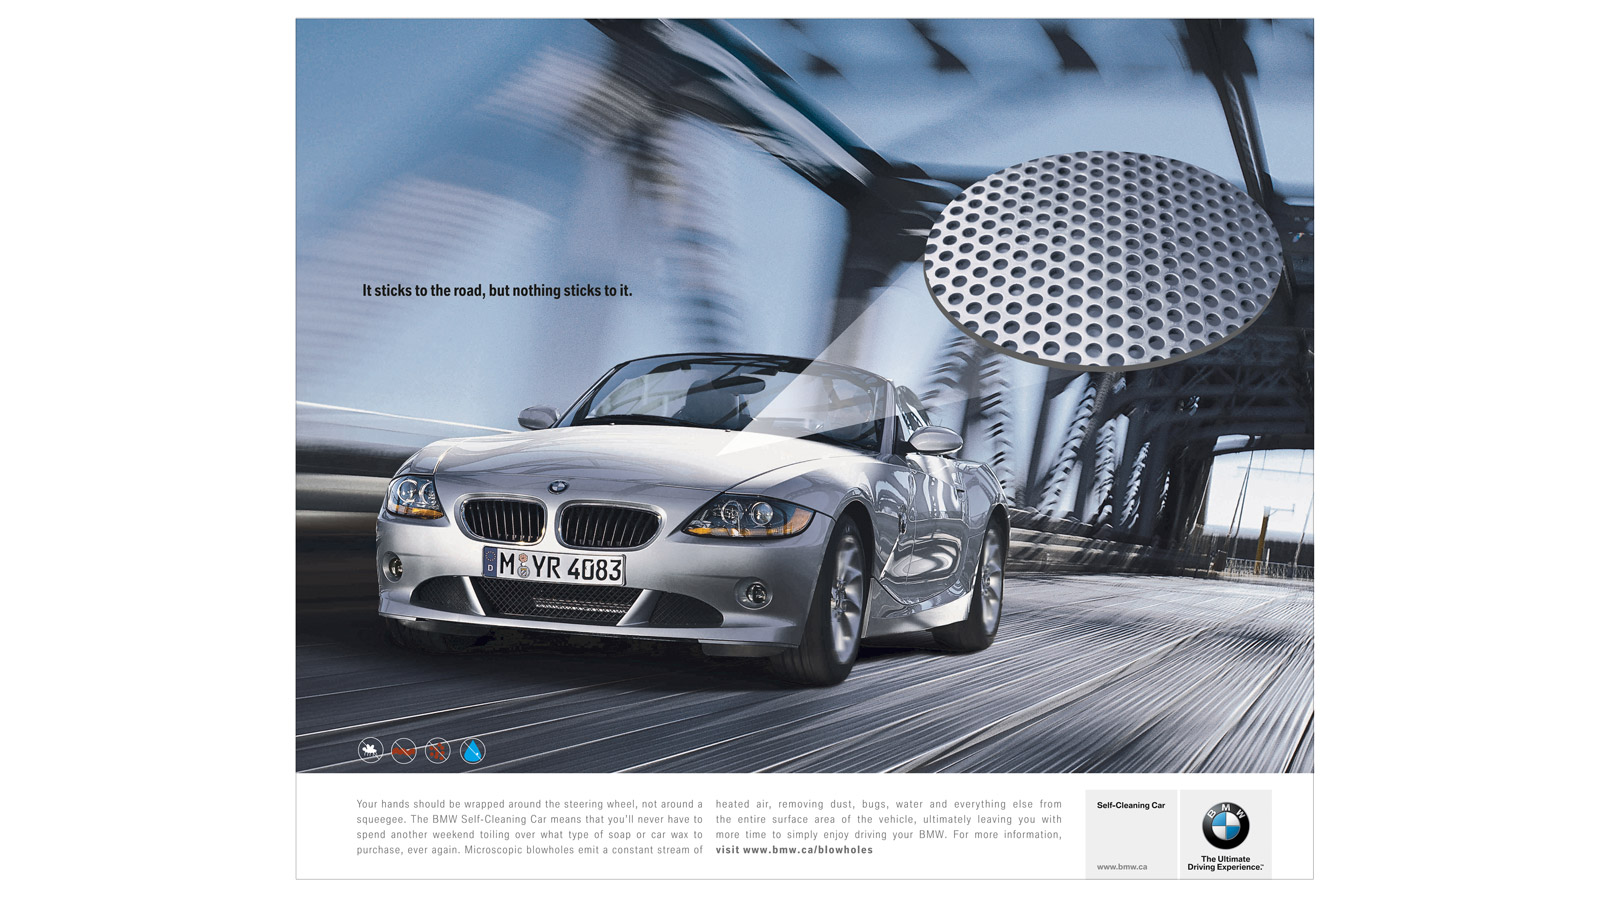 BMW Canada | April Fool’s Campaign | Digital Marketing, Website Design & Development